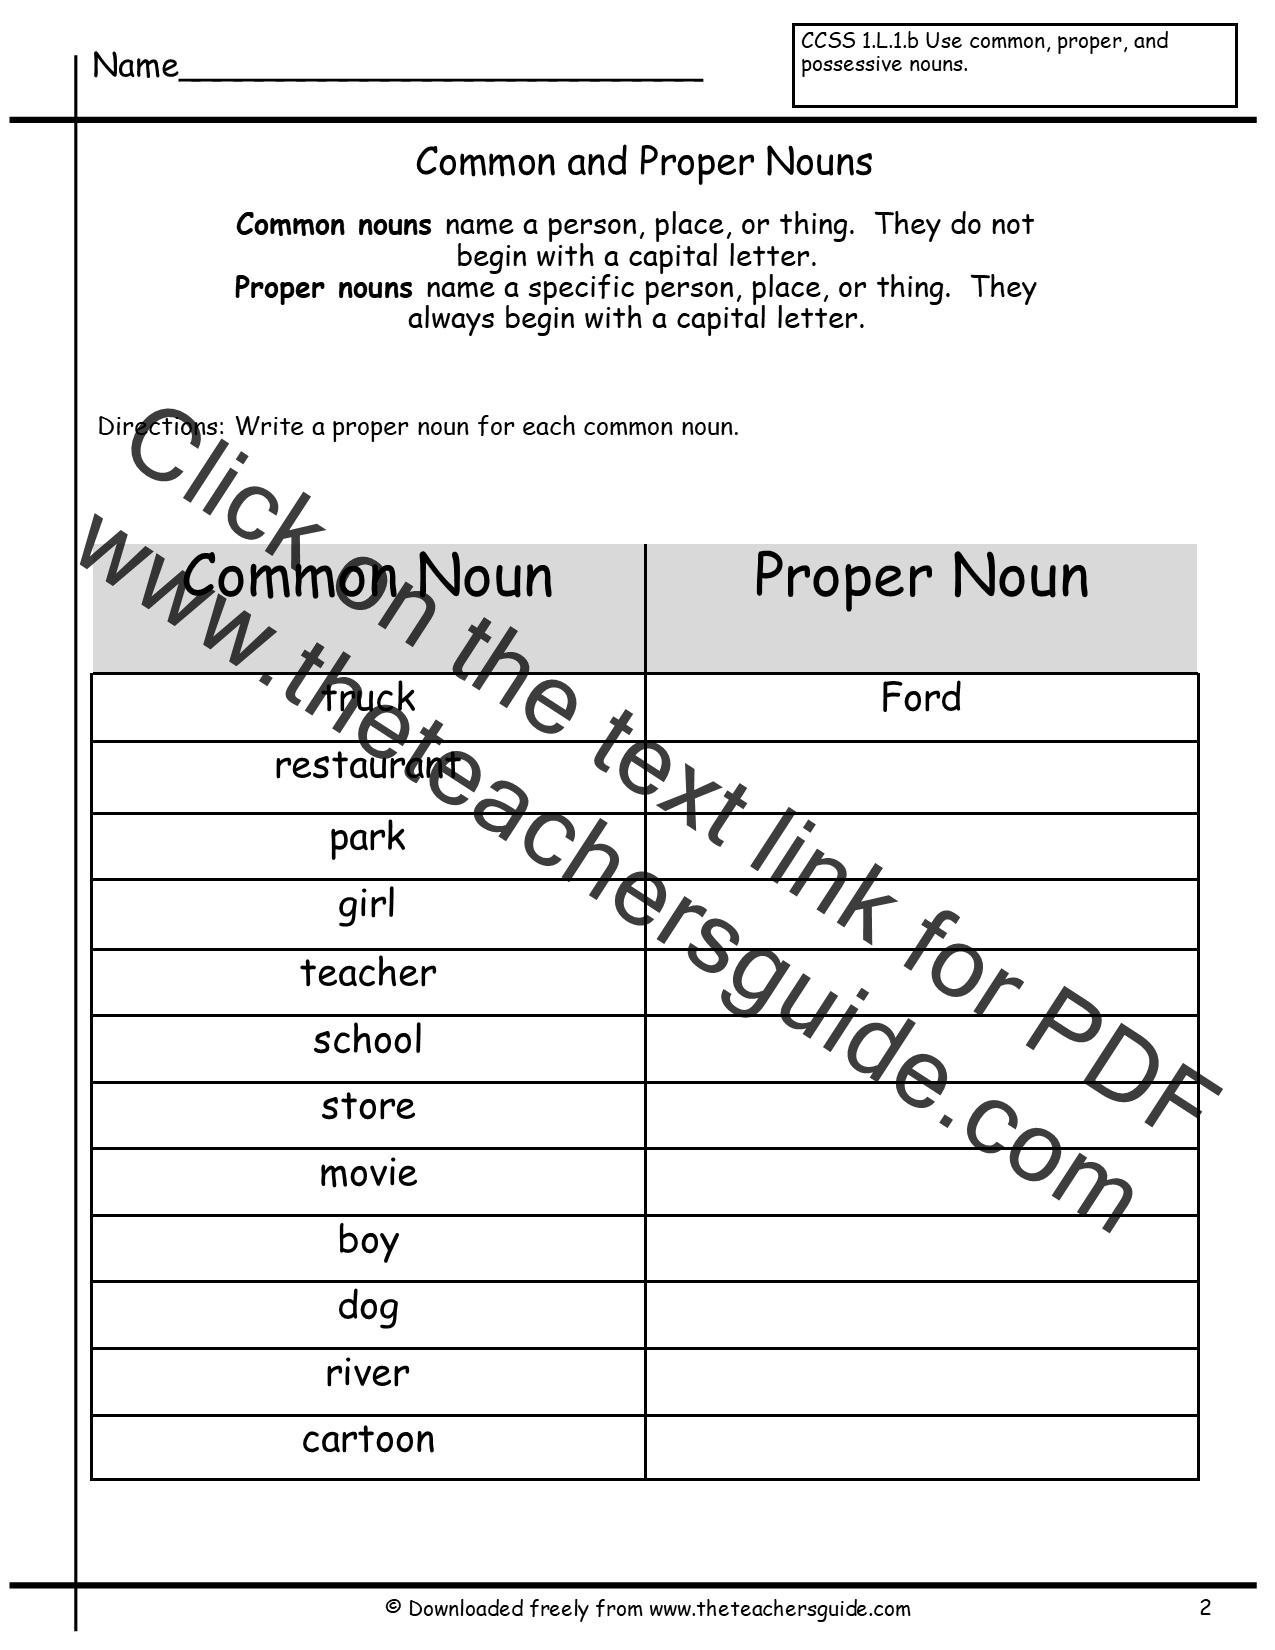 common-noun-and-proper-noun-worksheet-pdf-free-printable-for-grade-1-download-printables